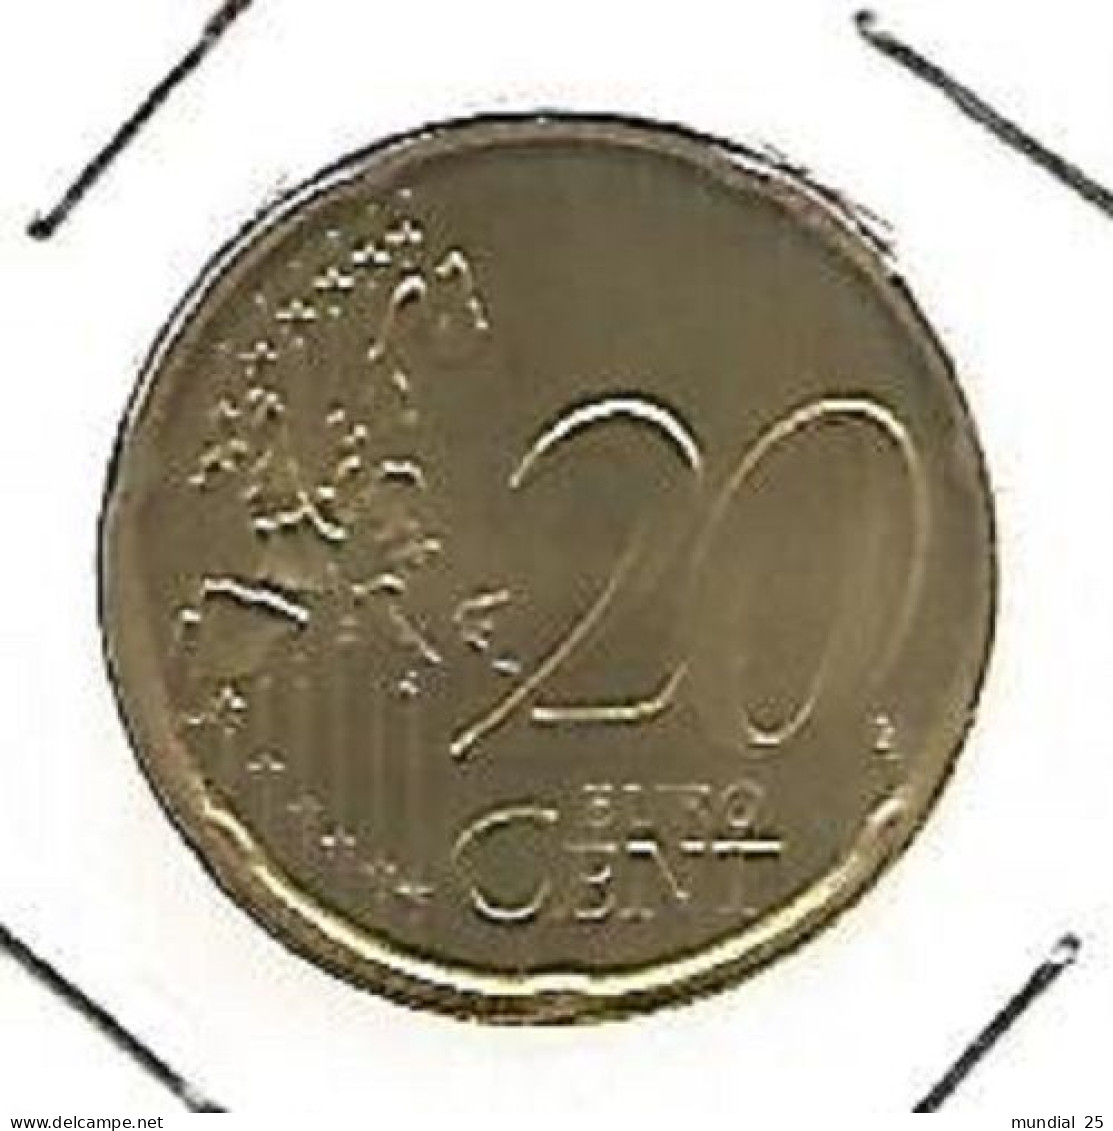 SPAIN 20 EURO CENT 1999 M - Spain